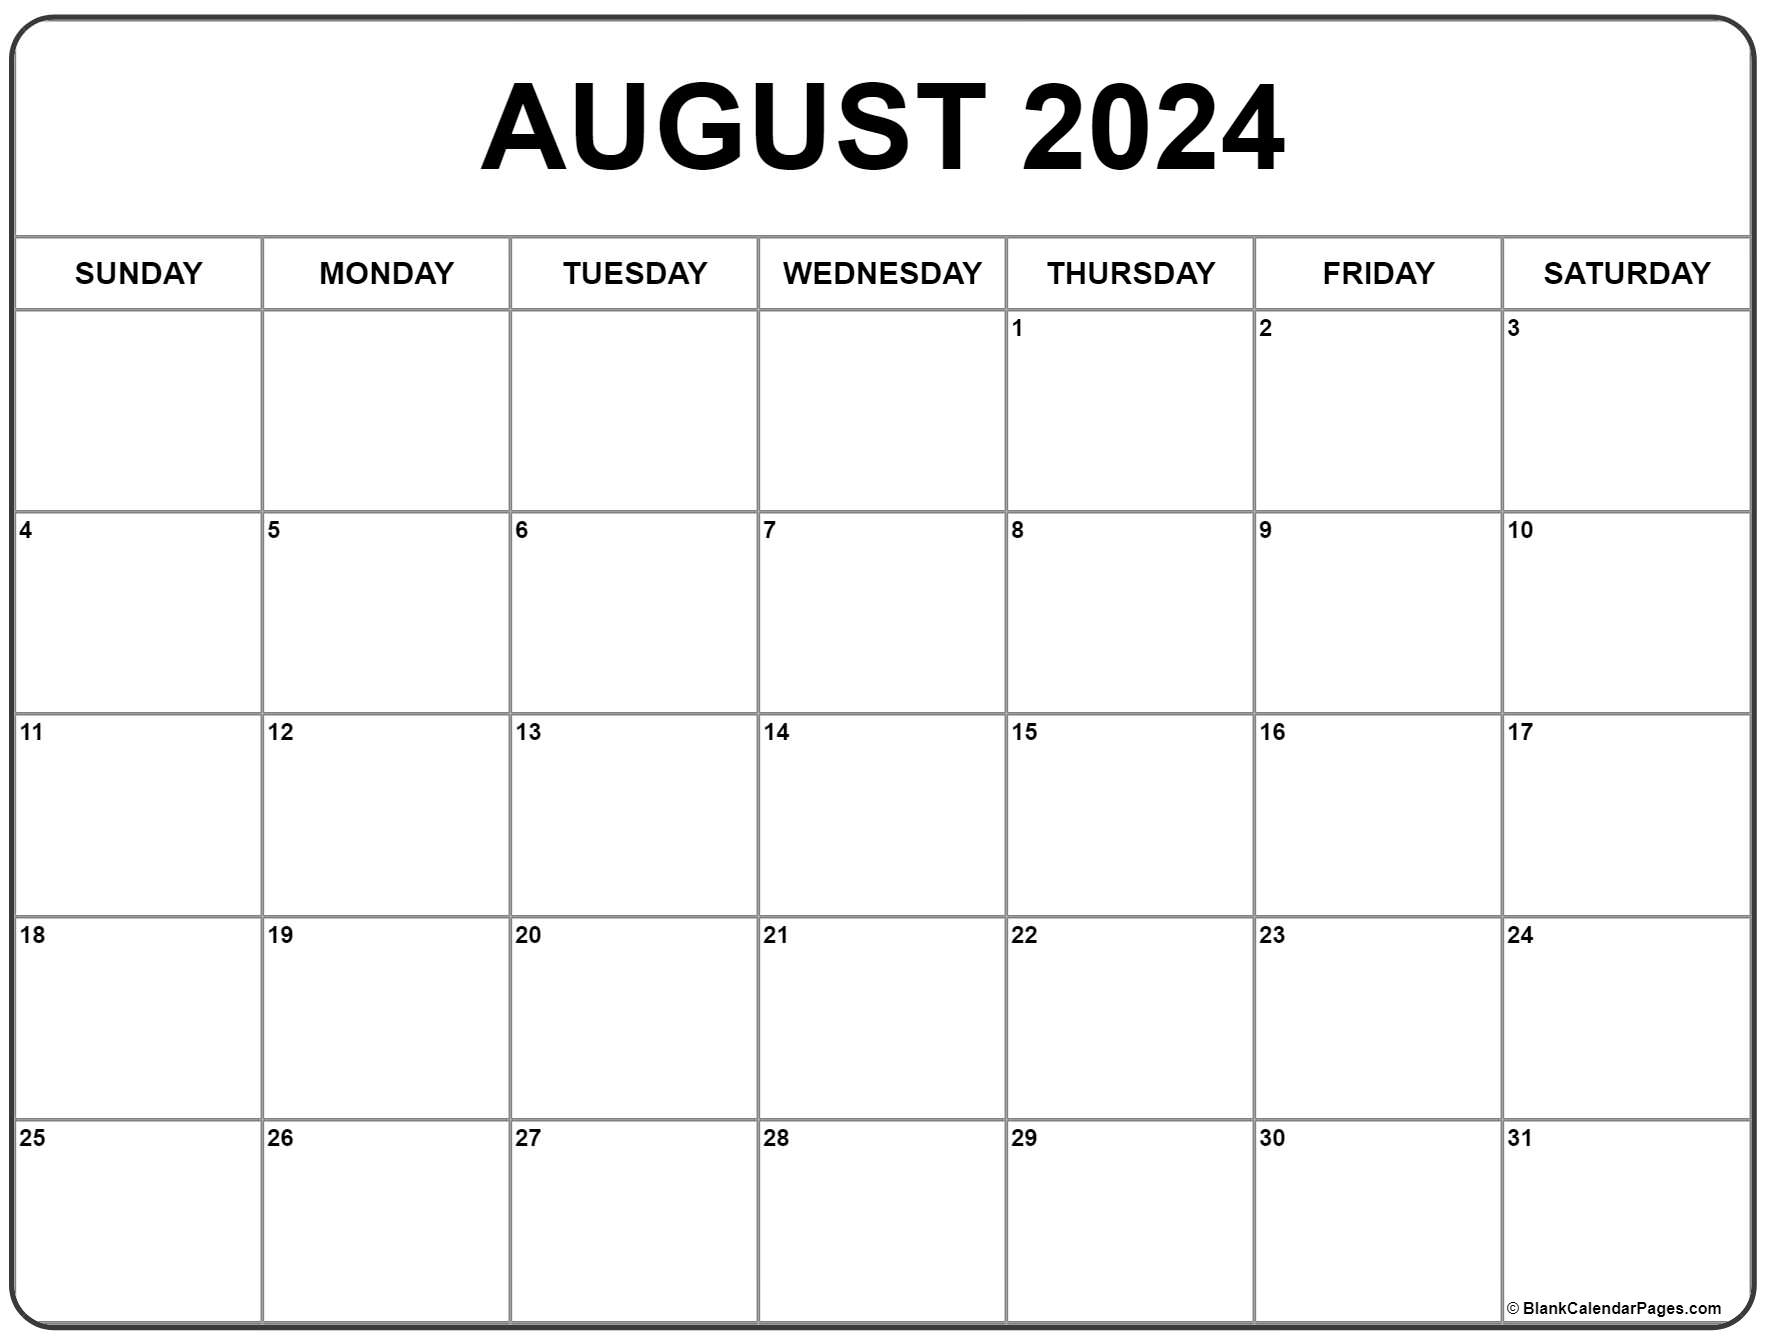 August 2024 Calendar | Free Printable Calendar throughout Free Printable Calendar Aug 2024